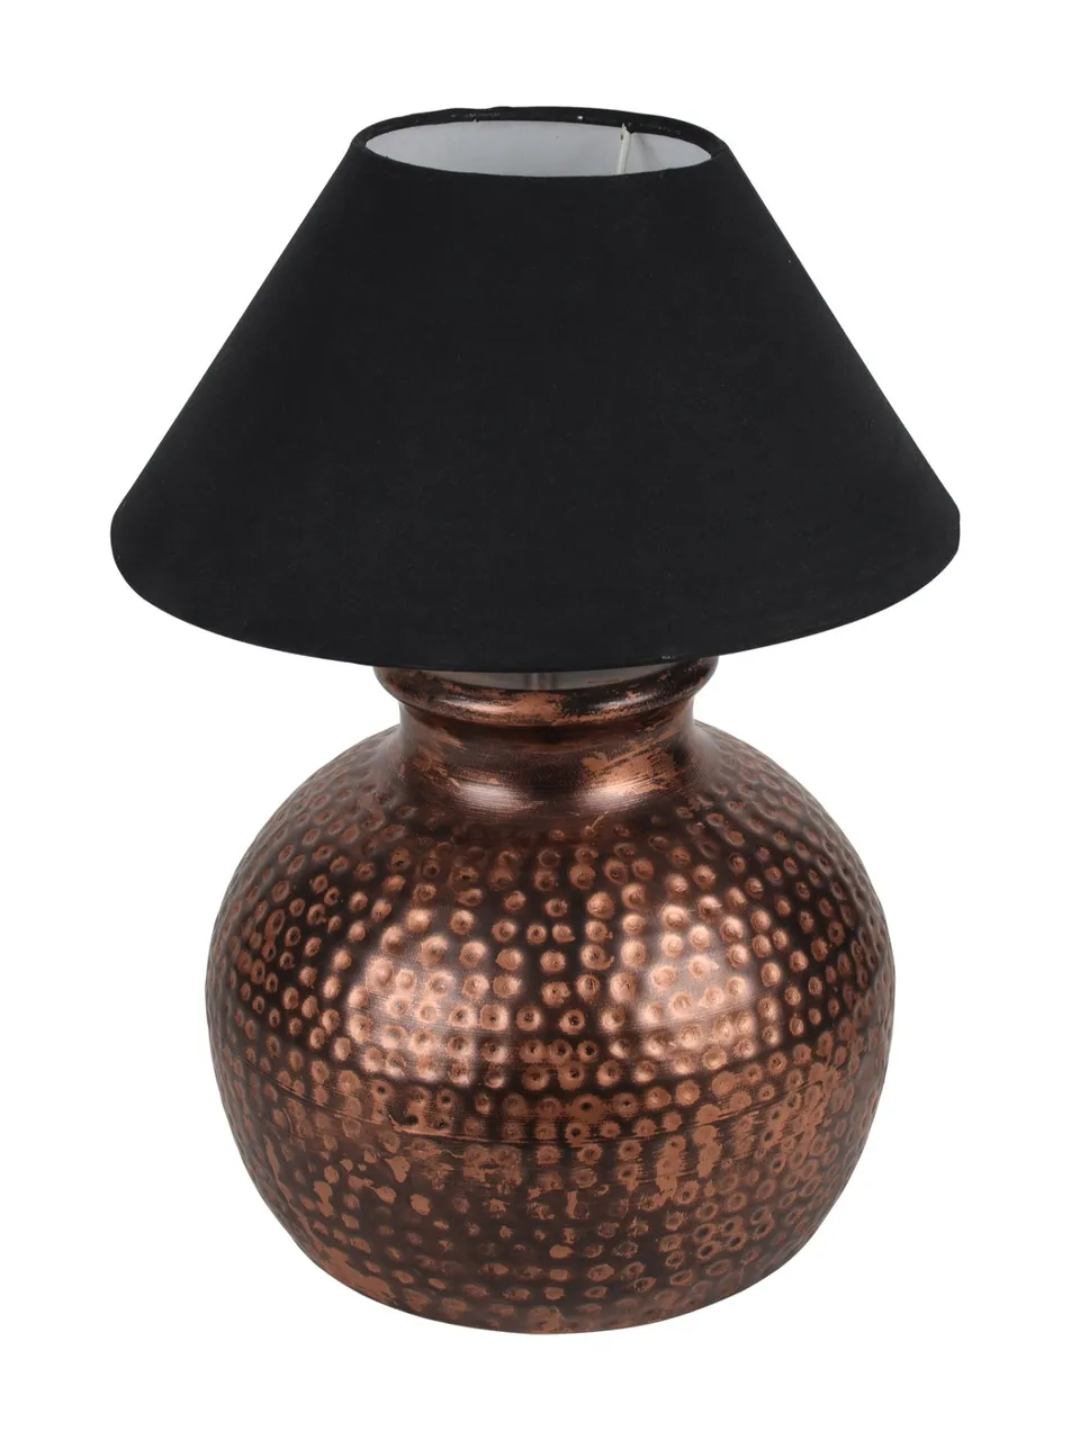 Antique Table Lamp Pot Black Shade